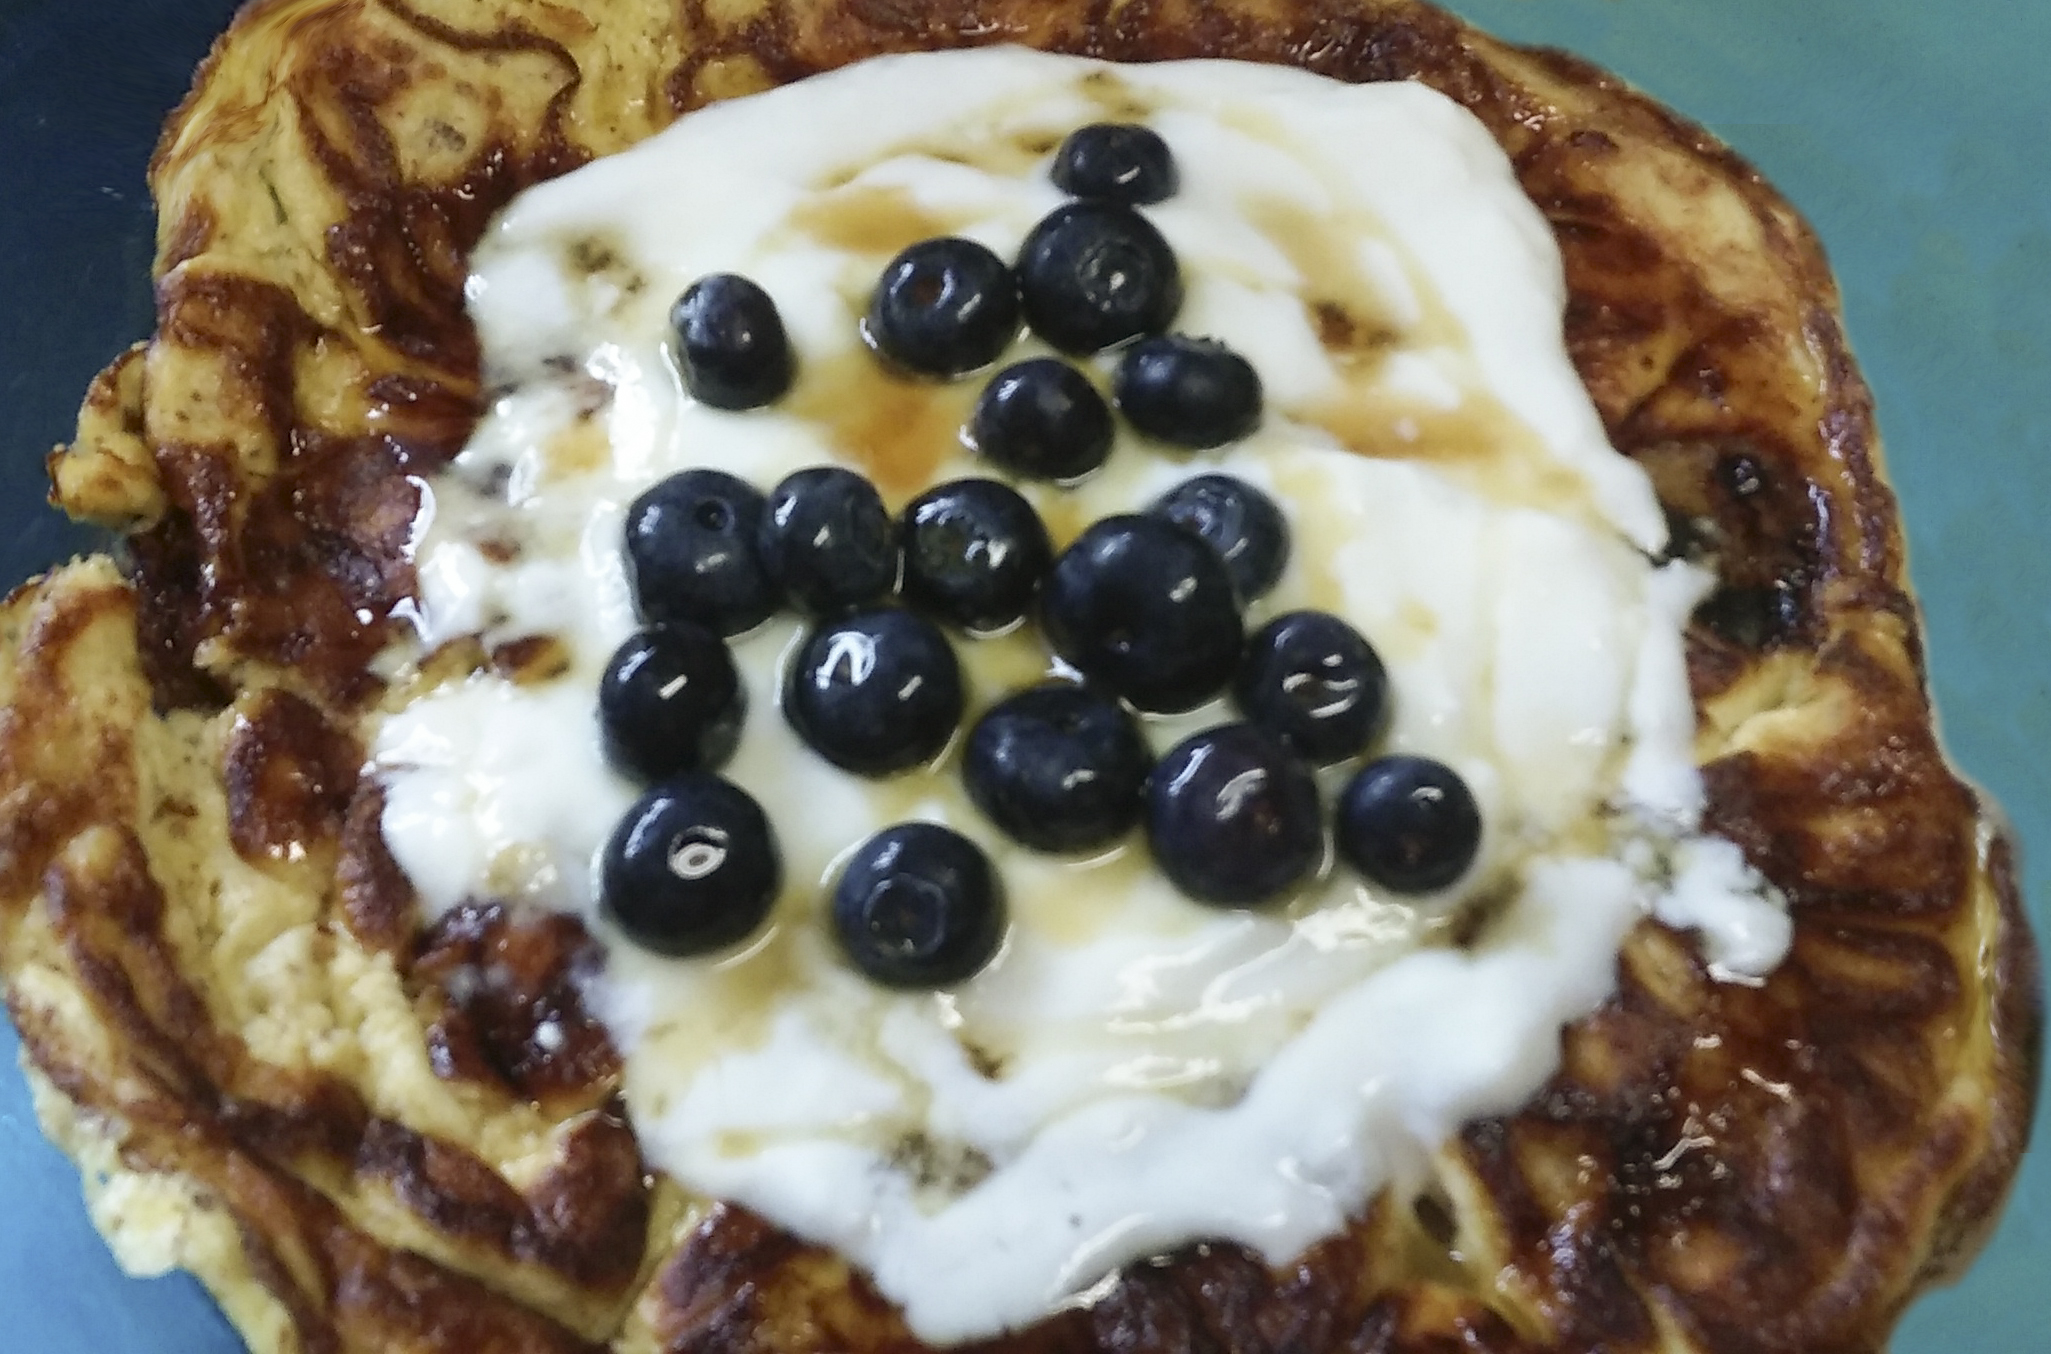 Almond Flour Banana Pancakes with Blueberries on Top